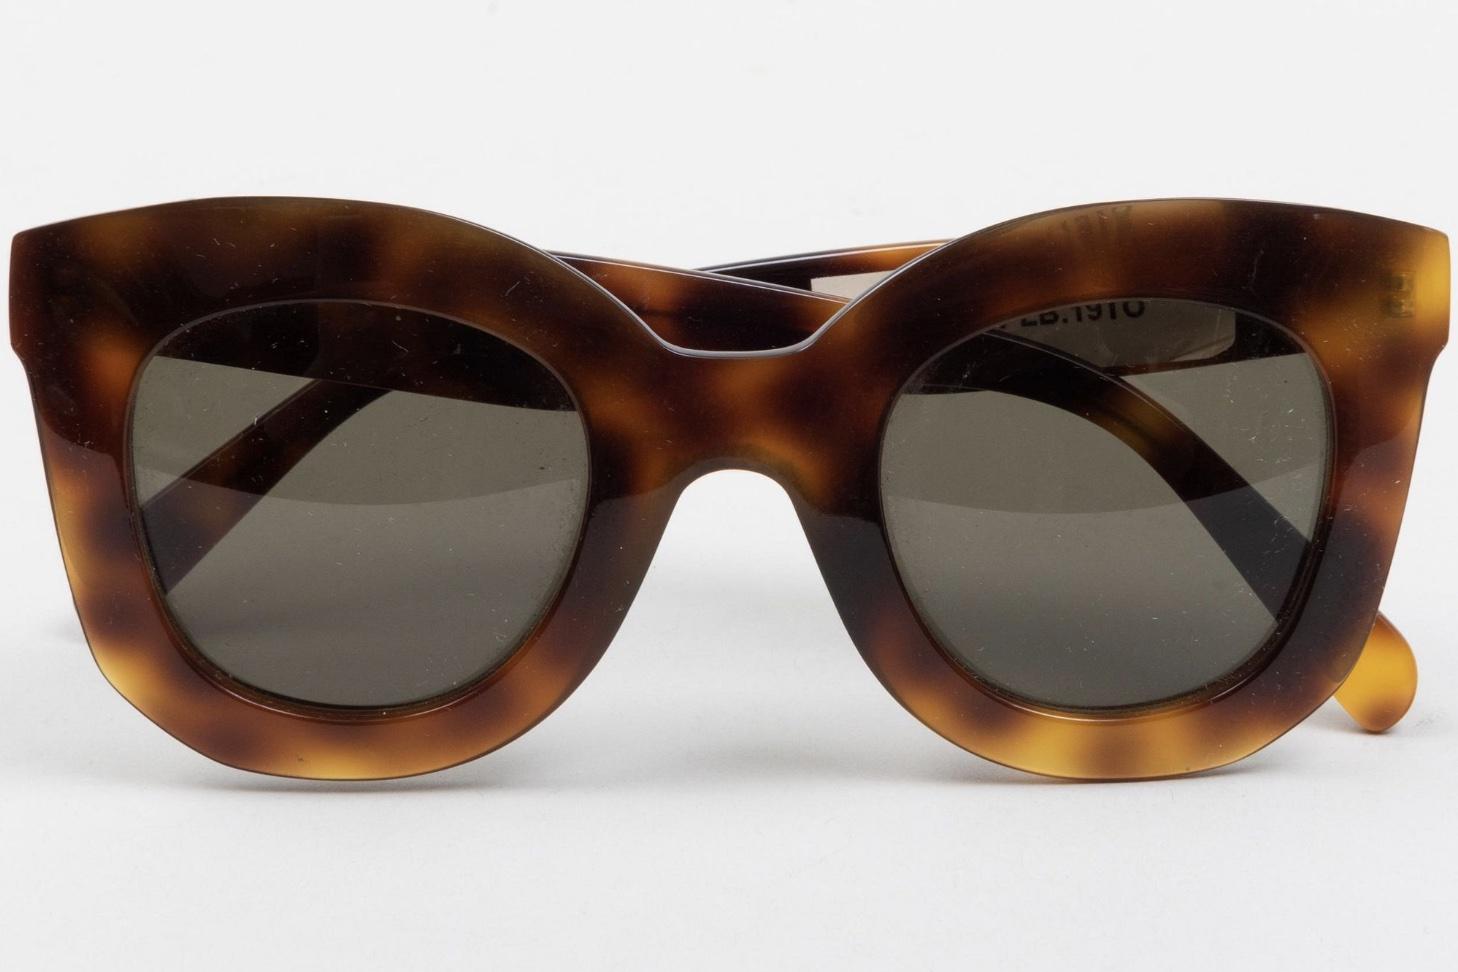 Didion sunglasses